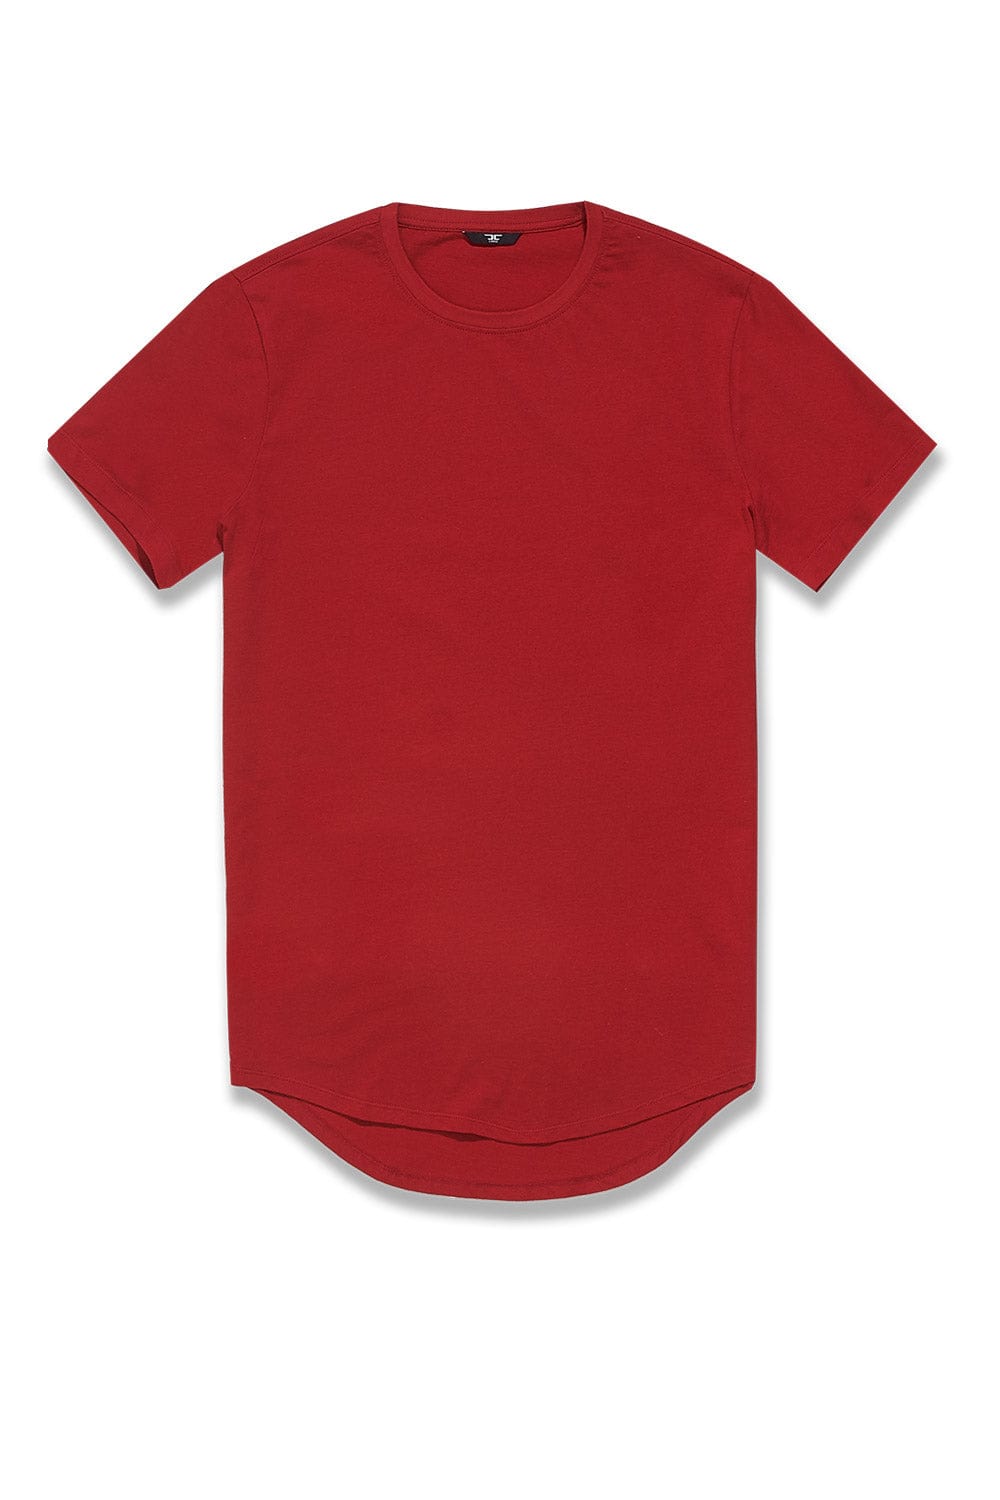 JC Big Men Big Men's Scallop T-Shirt (Name Your Price) Ox Blood / 4XL